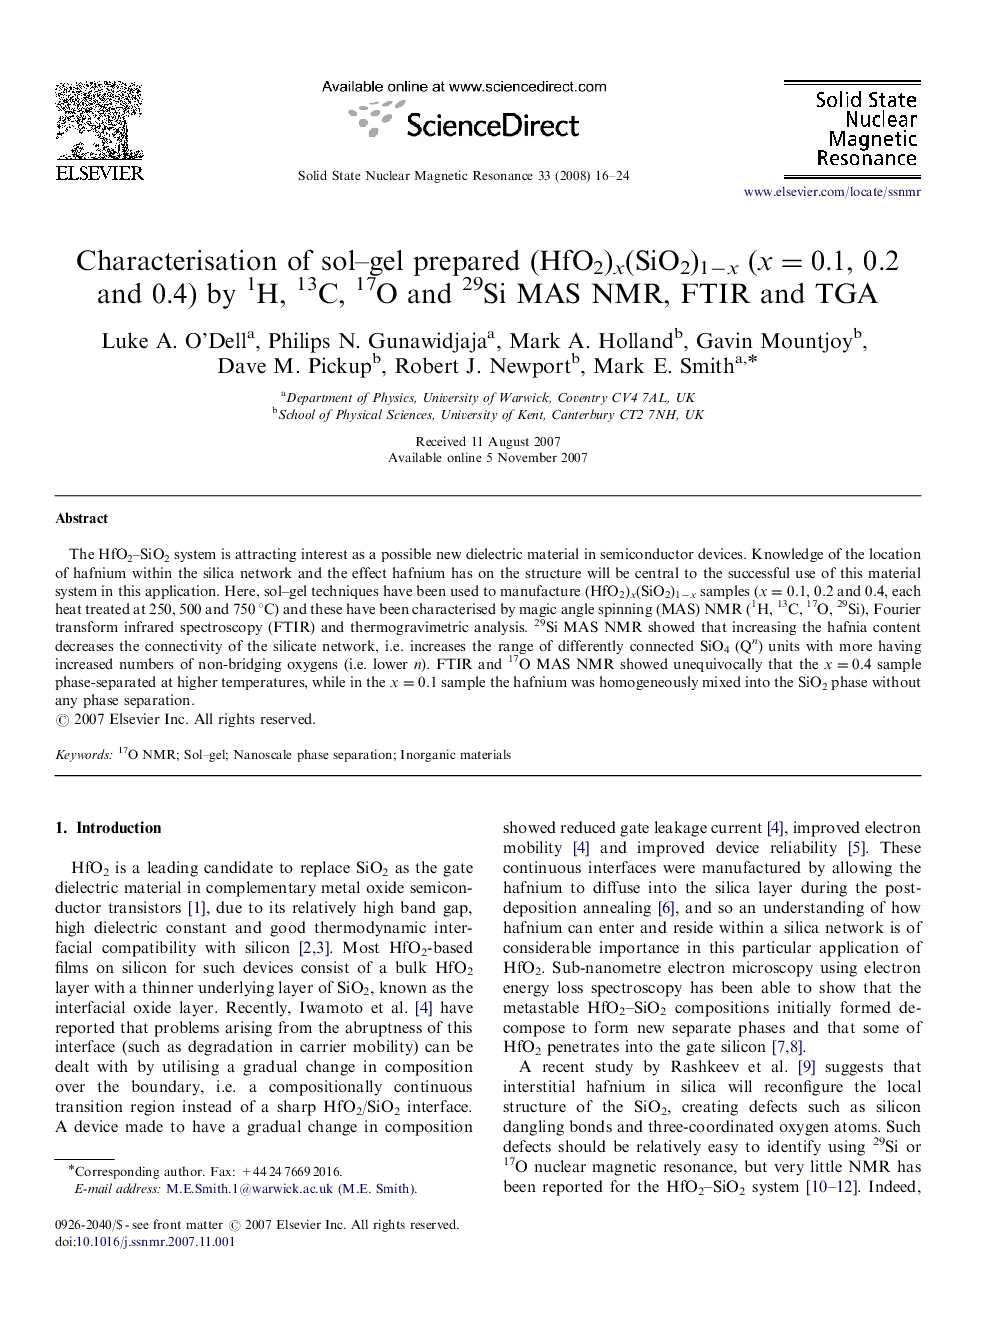 Characterisation of sol-gel prepared (HfO2)x(SiO2)1âx (x=0.1, 0.2 and 0.4) by 1H, 13C, 17O and 29Si MAS NMR, FTIR and TGA